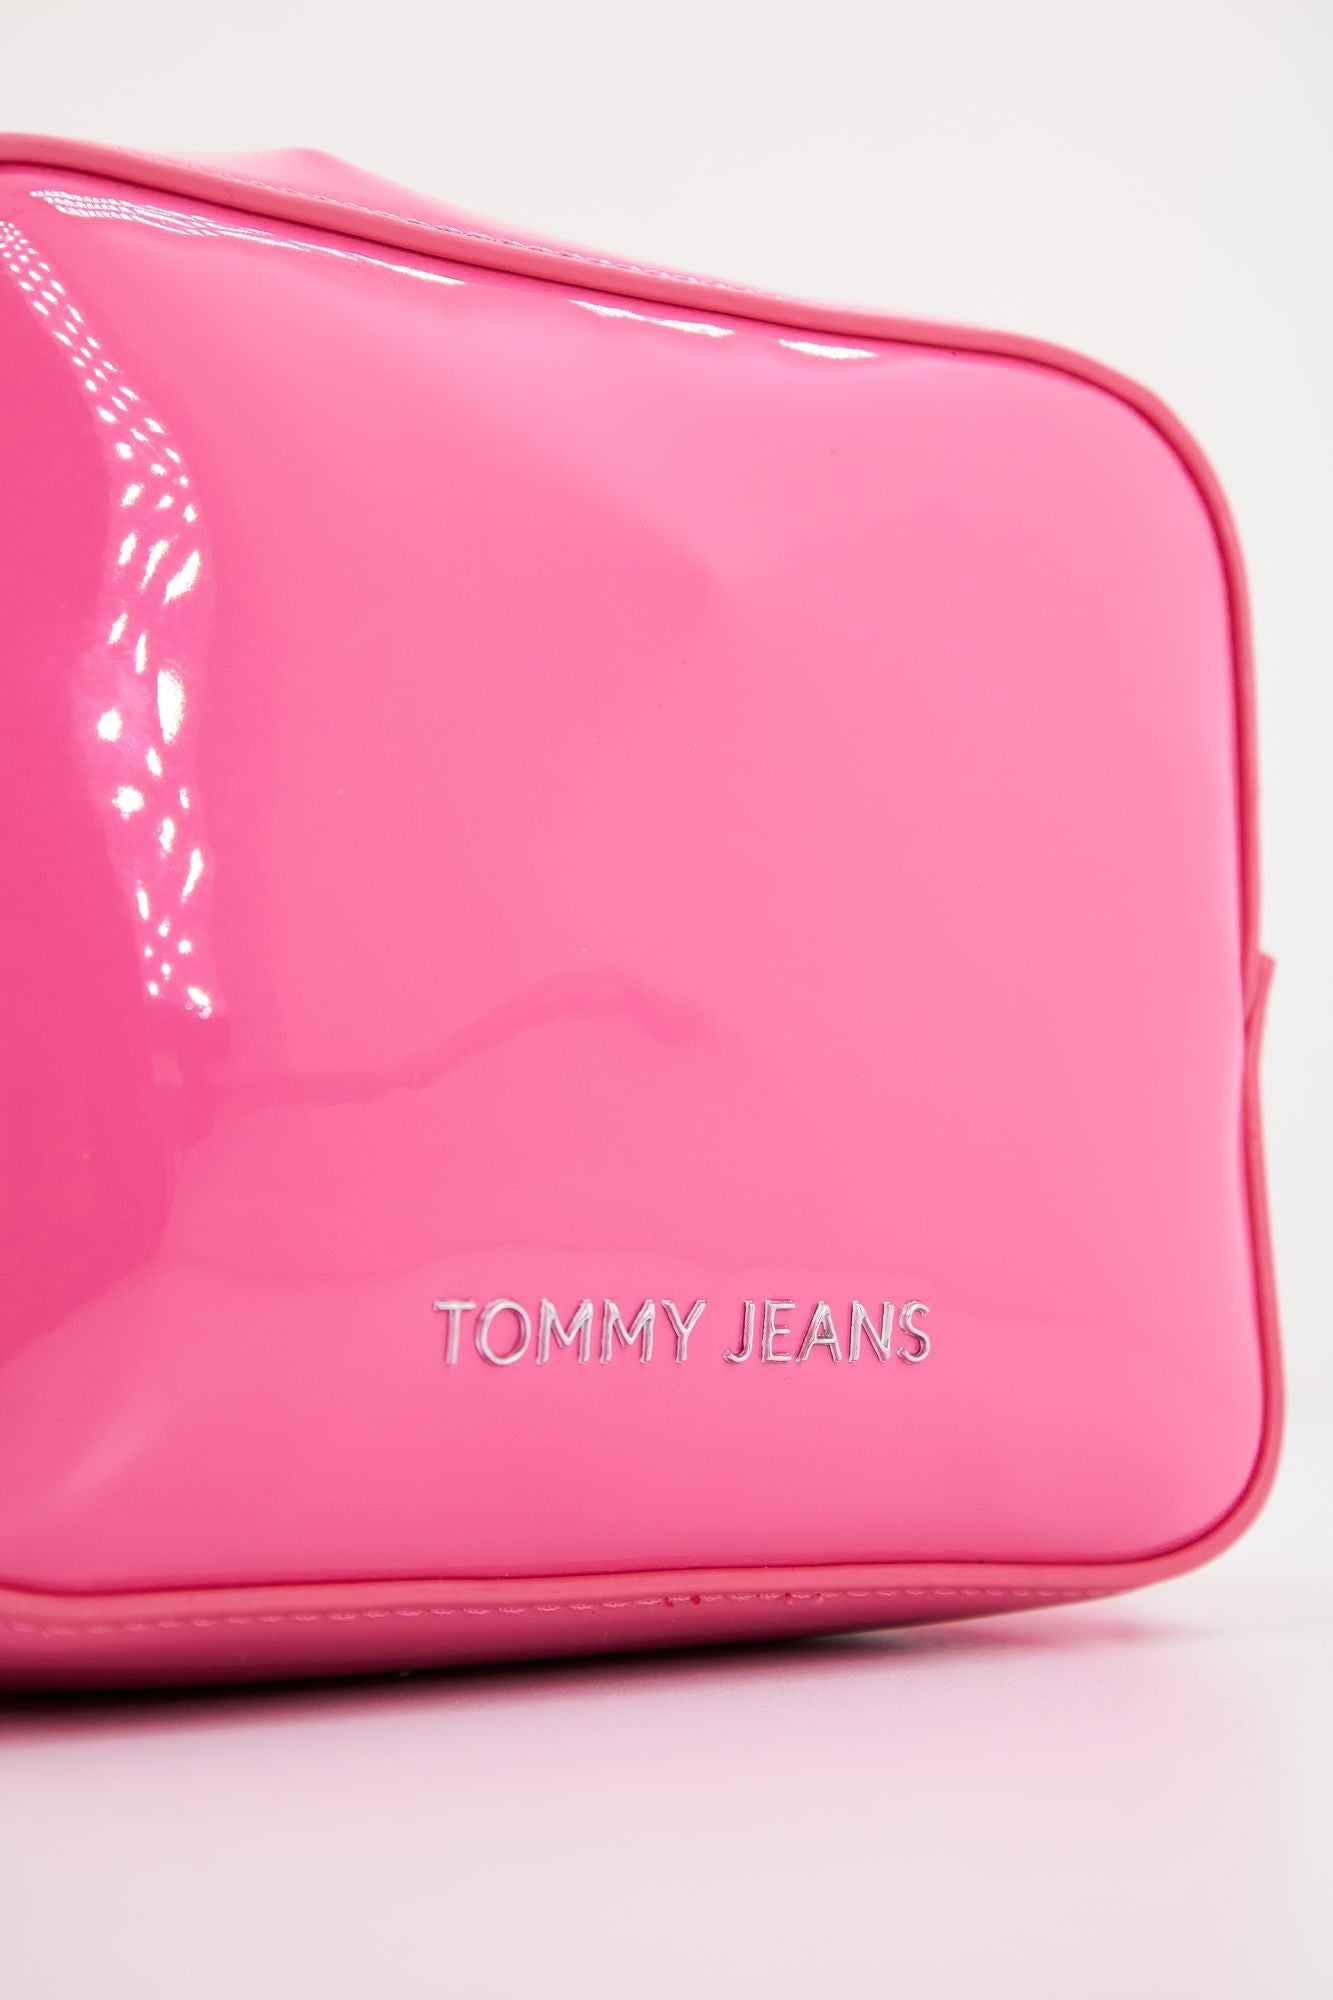 TOMMY JEANS TJW ESS MUST CAMERA BAG en color ROSA (4)